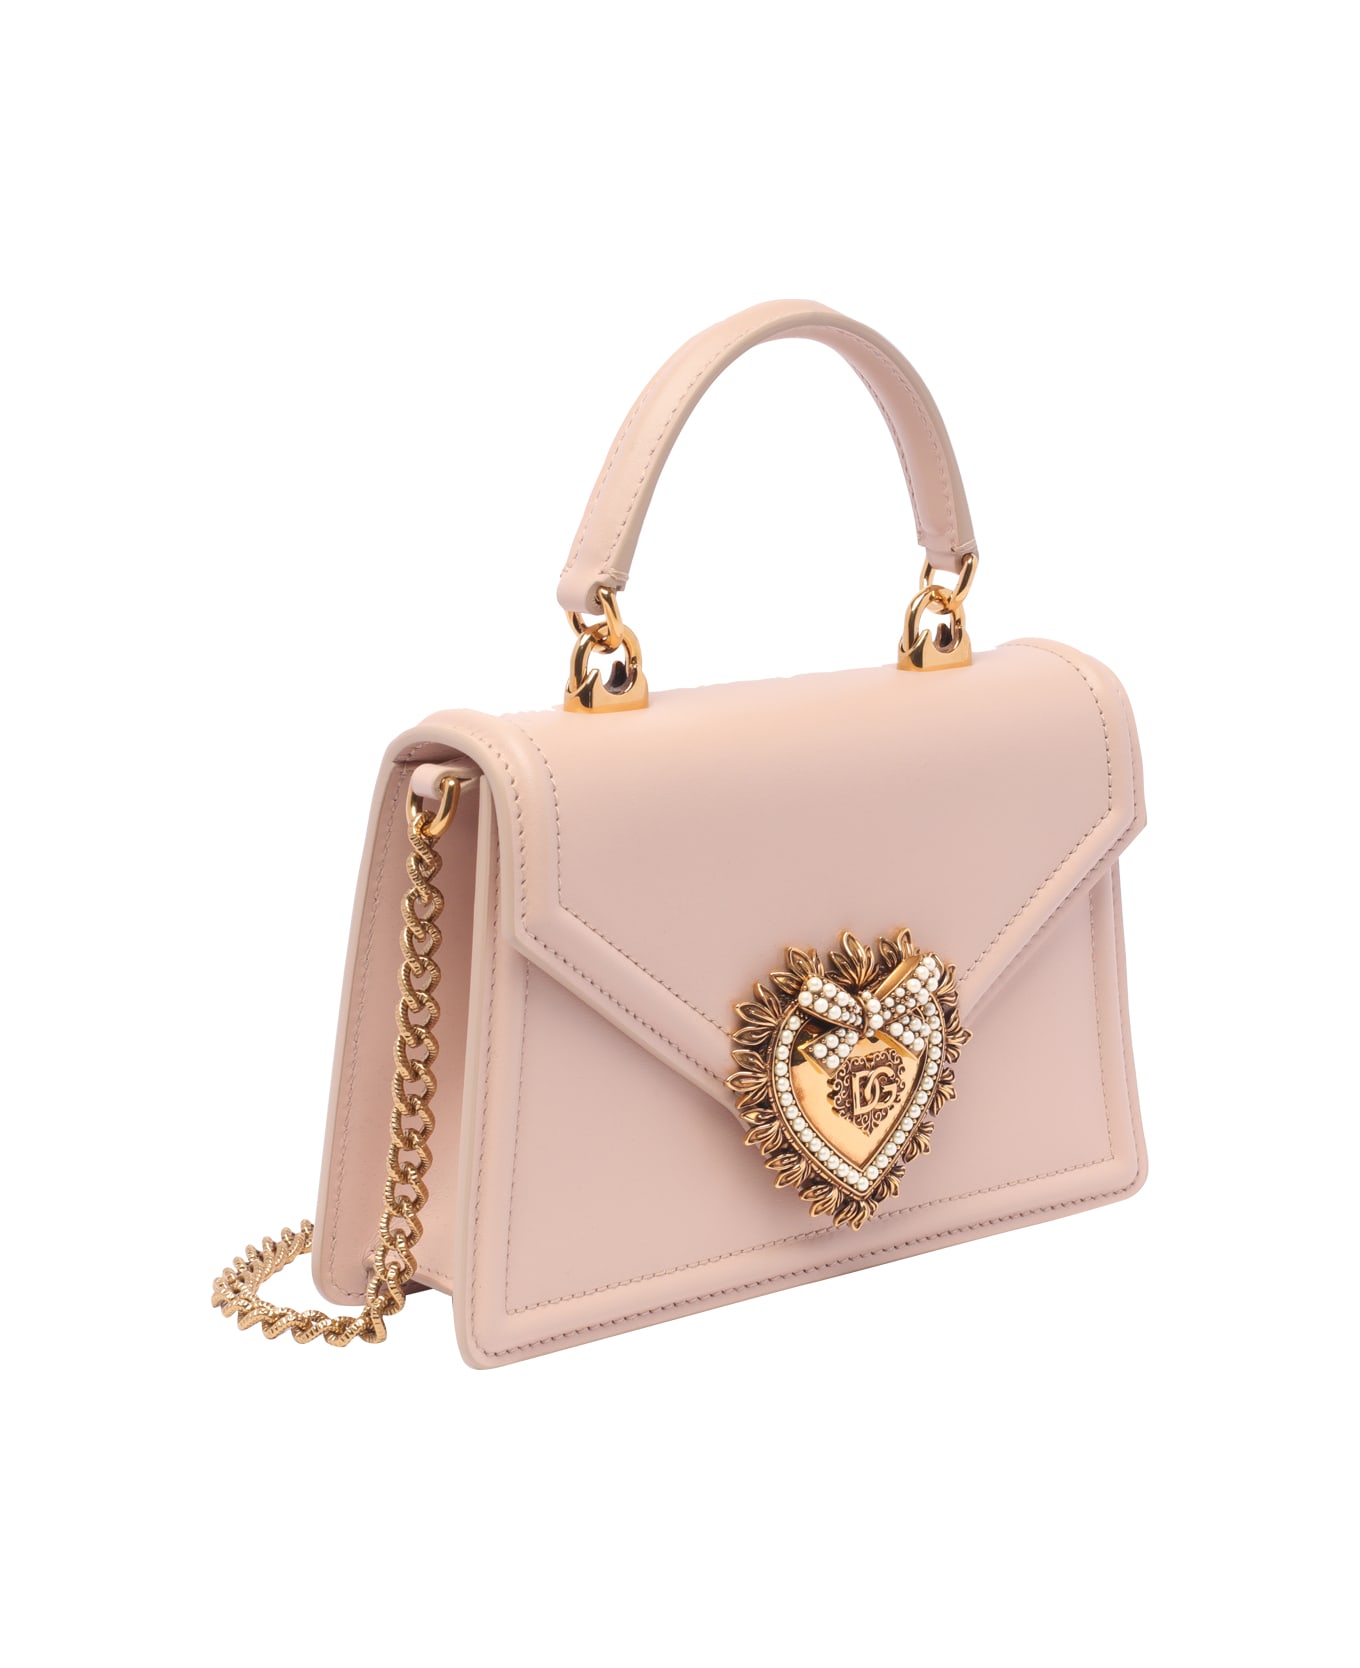 Dolce & Gabbana Devotion Small Handbag - Cipria